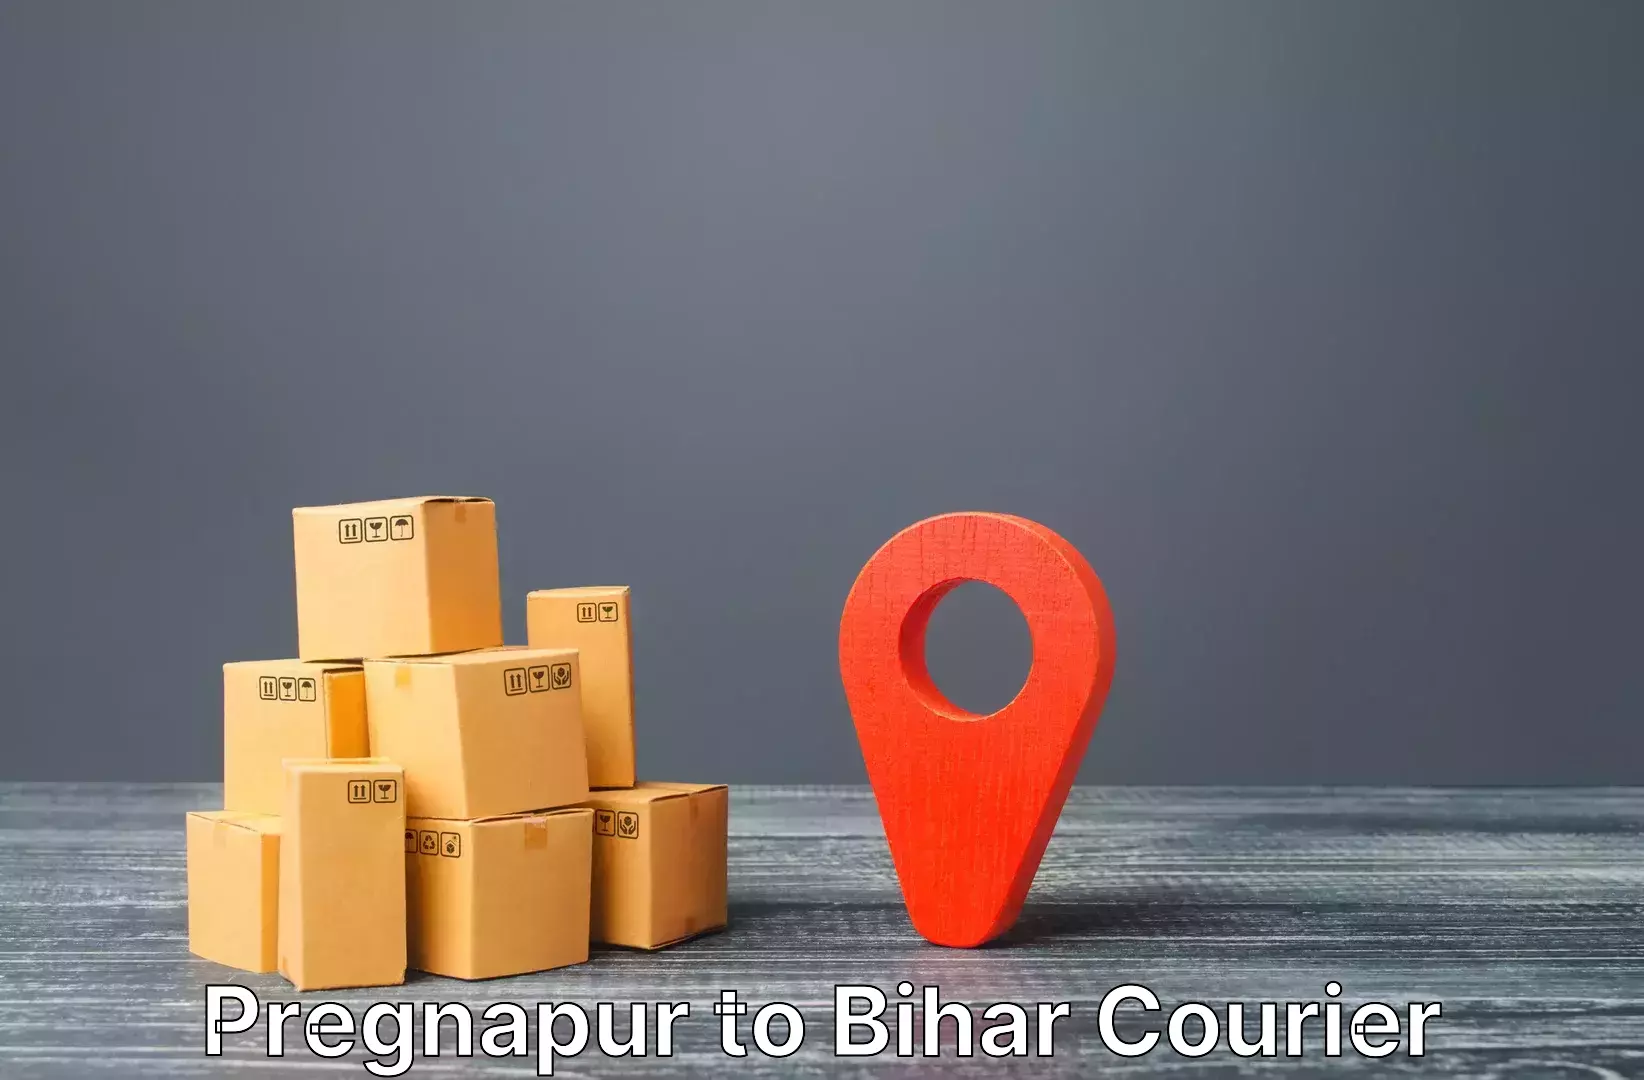 Urgent luggage shipment in Pregnapur to Gaya